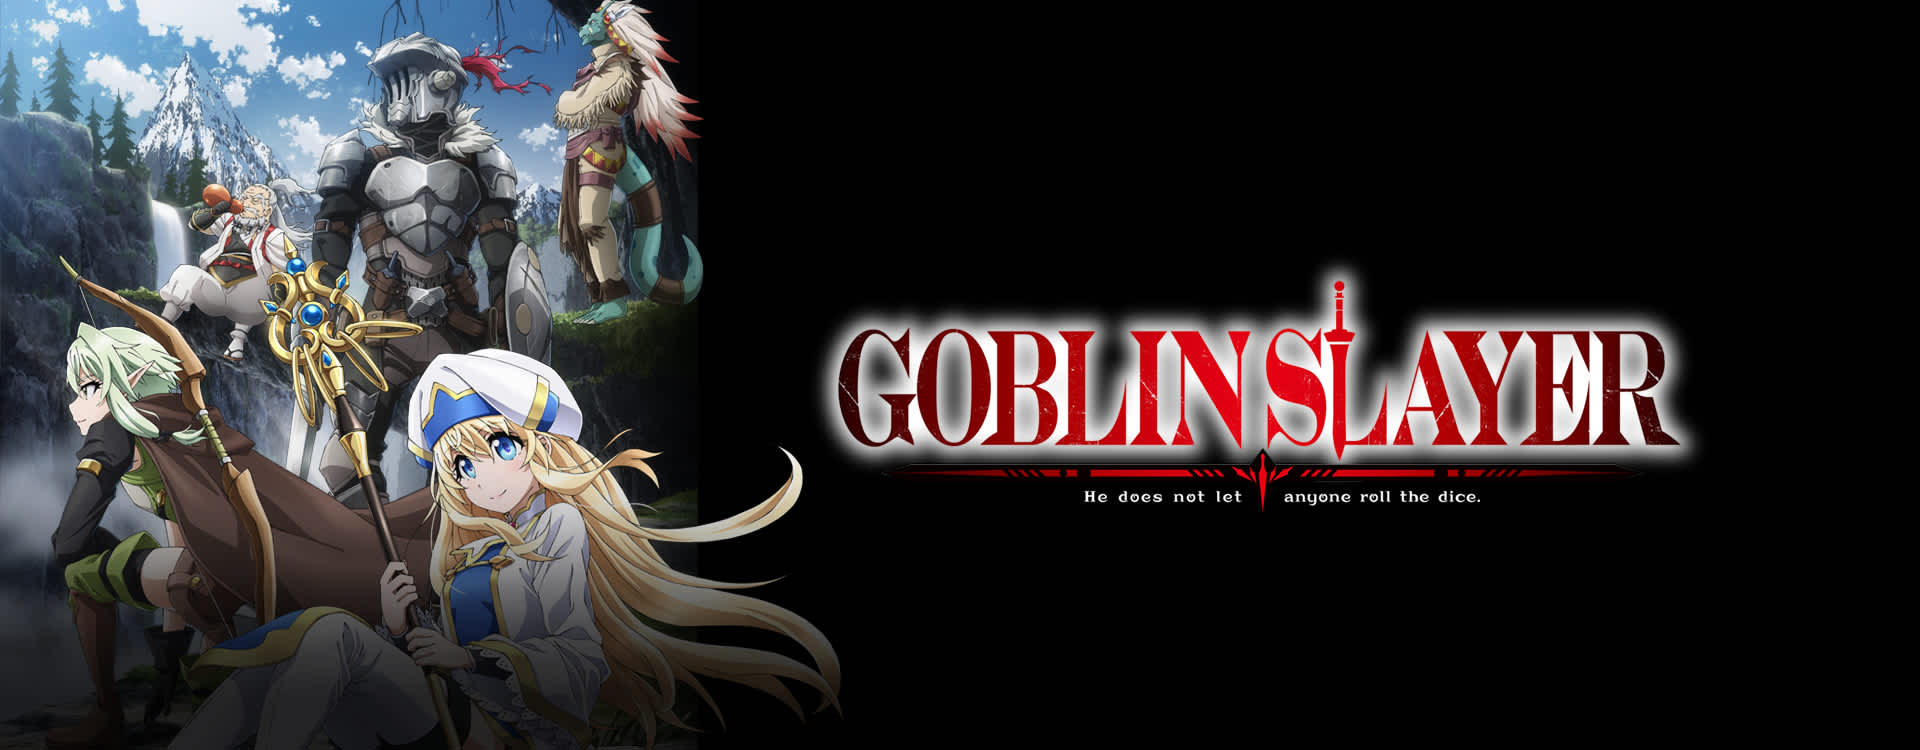 Goblin Slayer: Goblin's Crown Review